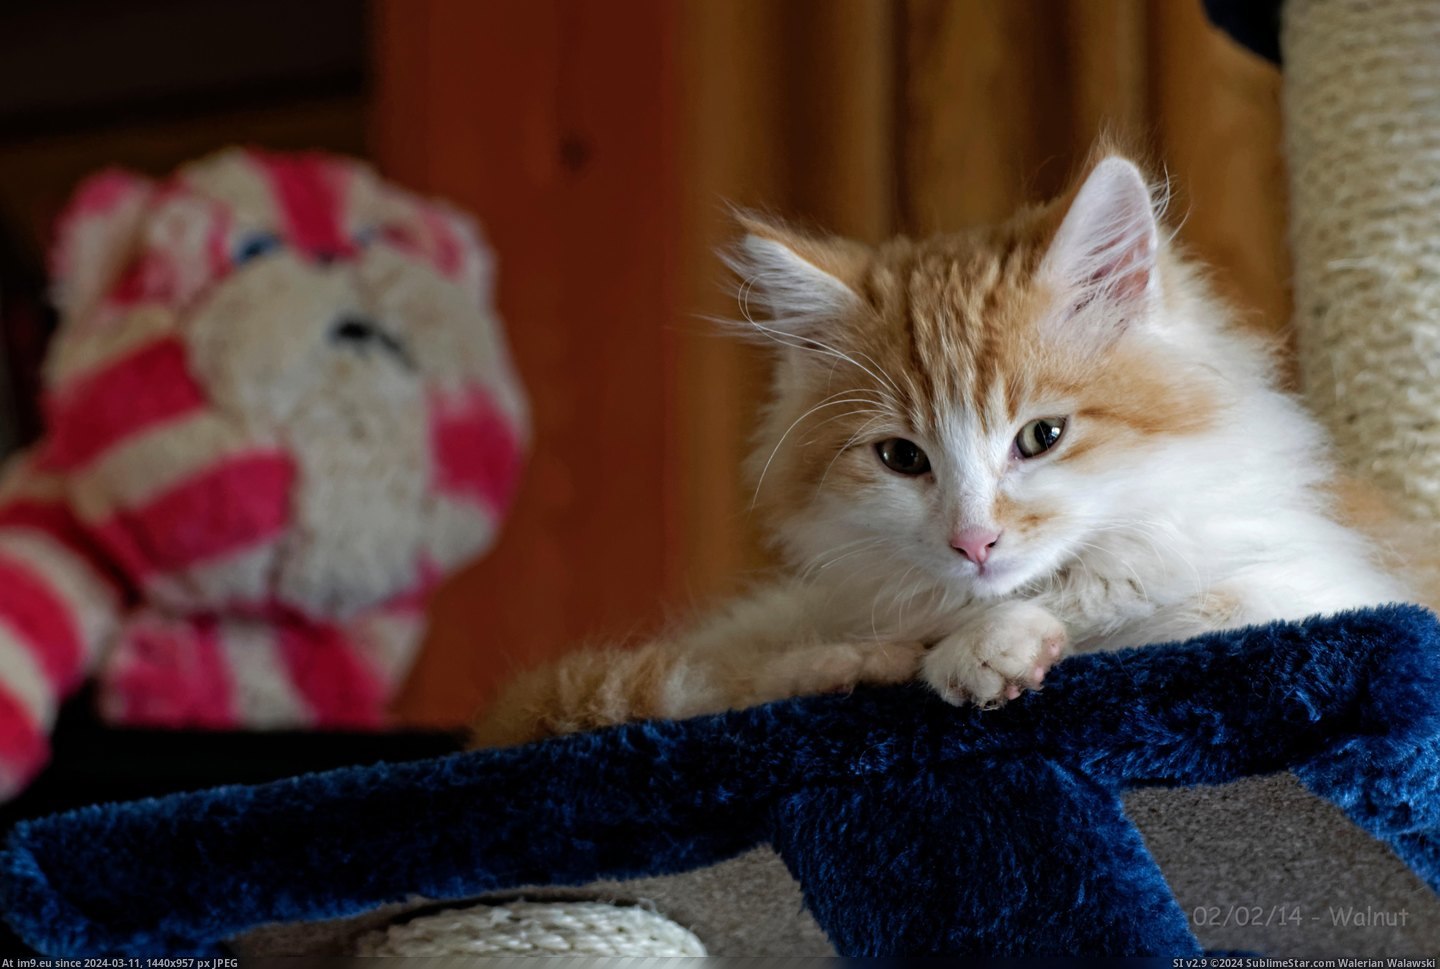 #Cats #Kitten #Walnut #Mistoffelees #Maine #Coon [Cats] My Maine Coon Kitten, Walnut Mistoffelees Pic. (Изображение из альбом My r/CATS favs))